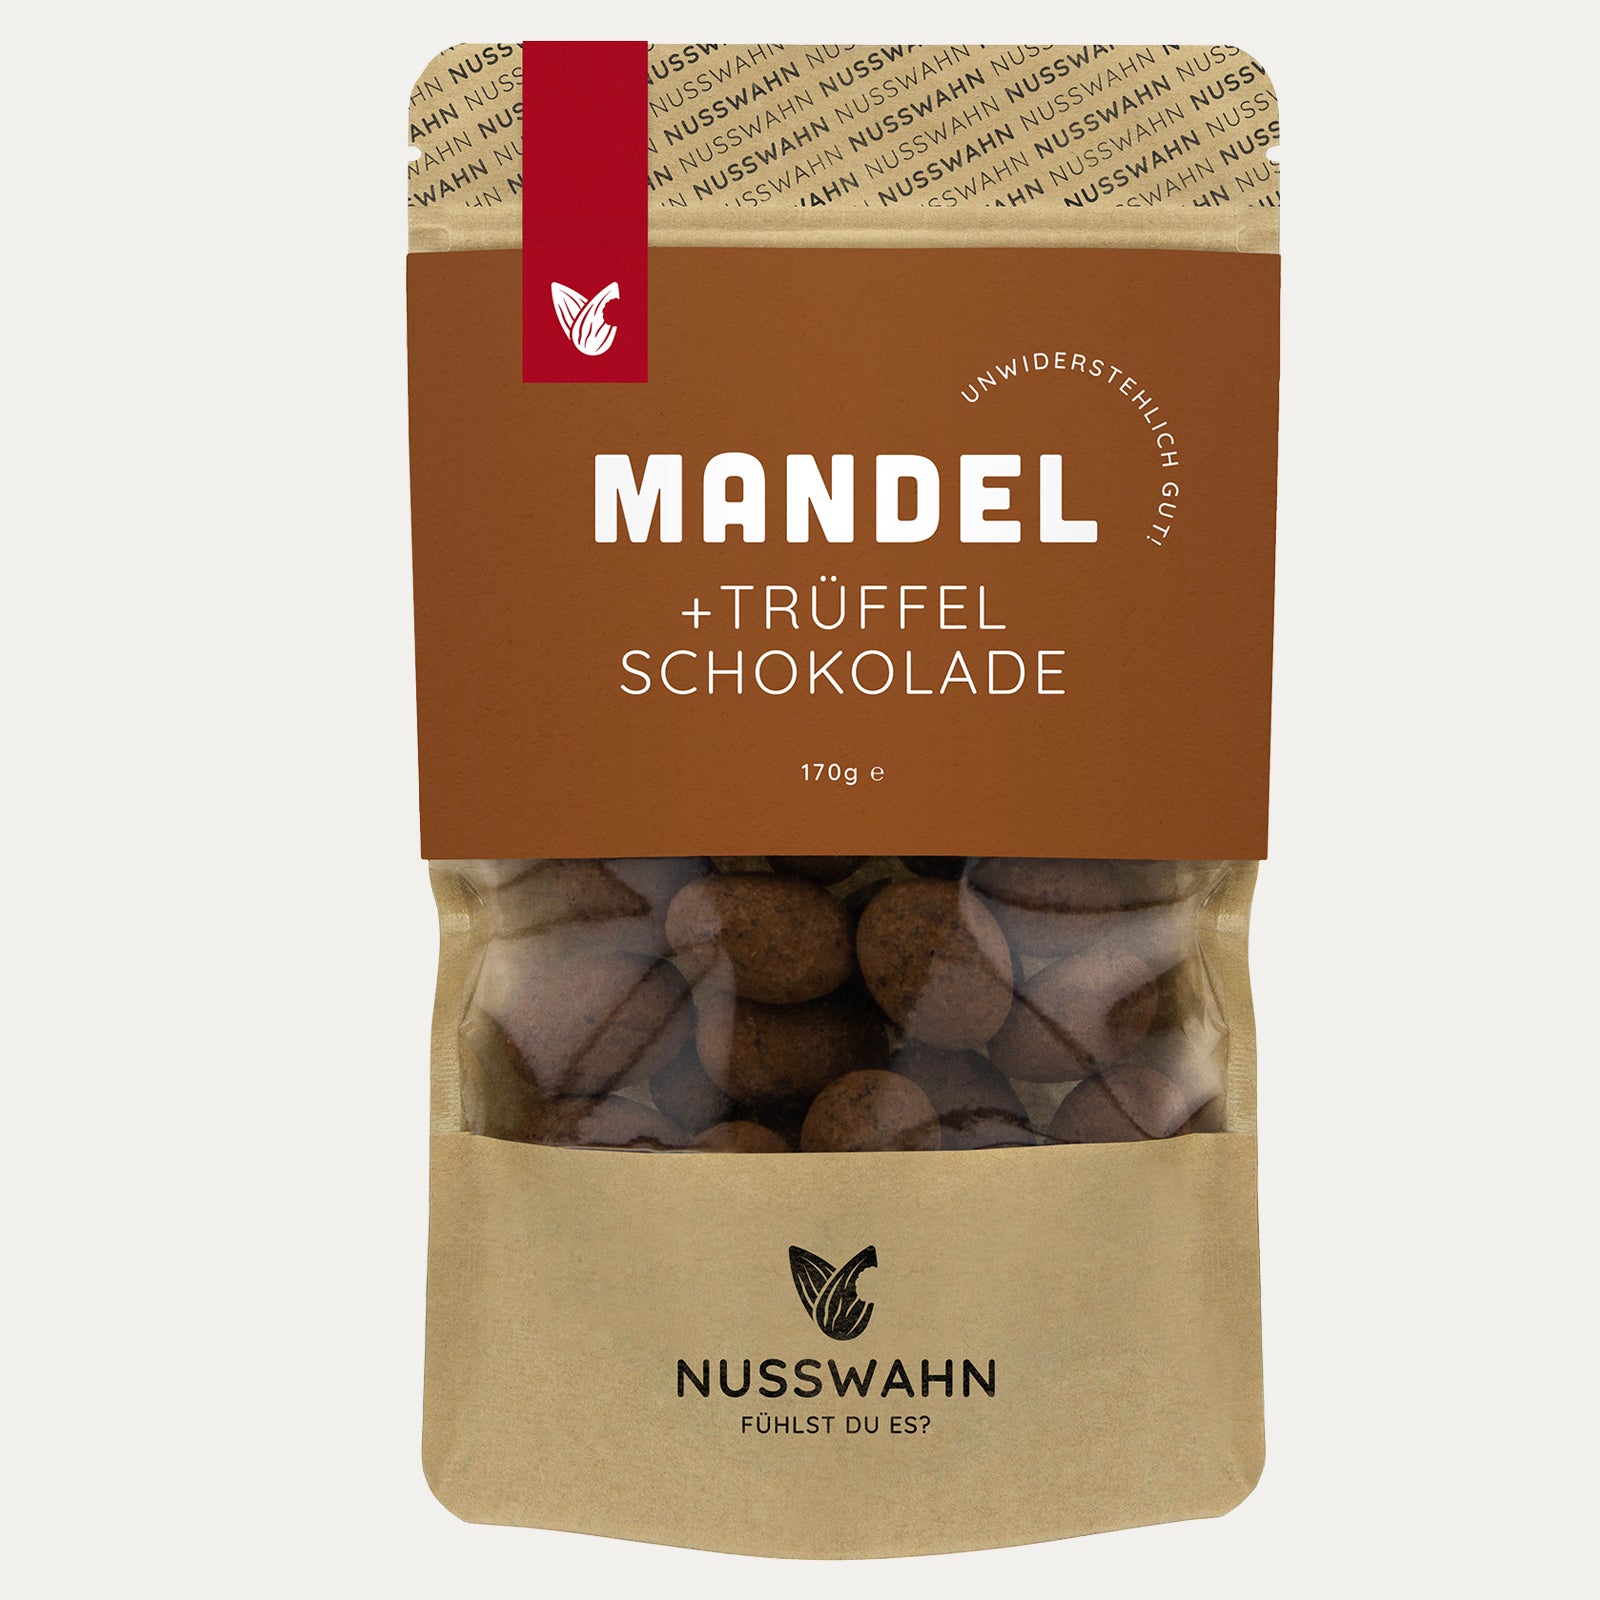 Mandel Trüffel Schokolade Nusswahn 150g